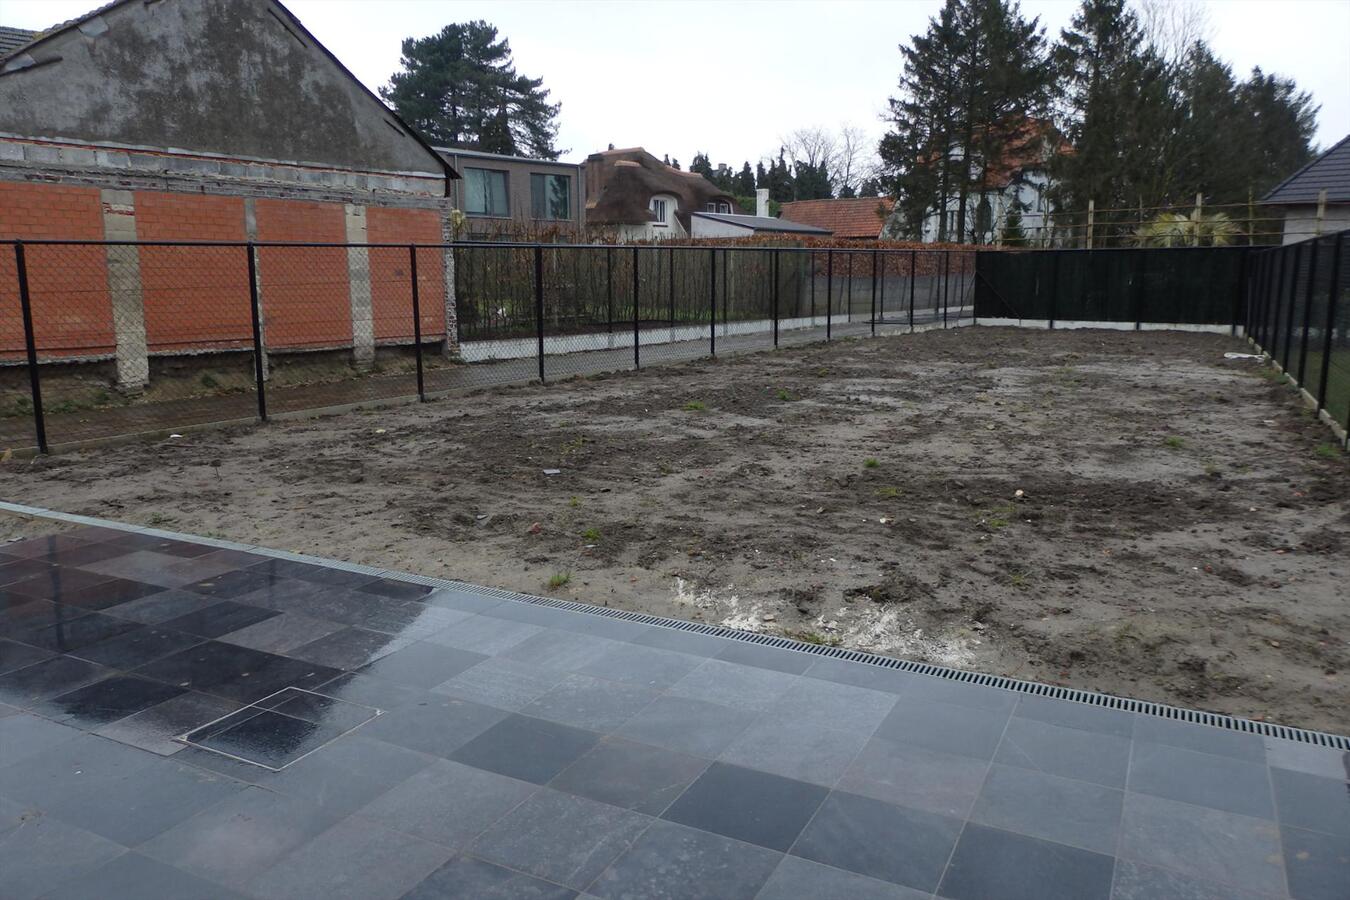 - VERHUURD - Nieuwbouw woning met grote tuin en ruime parkeergelegenheid te Zomergem! 